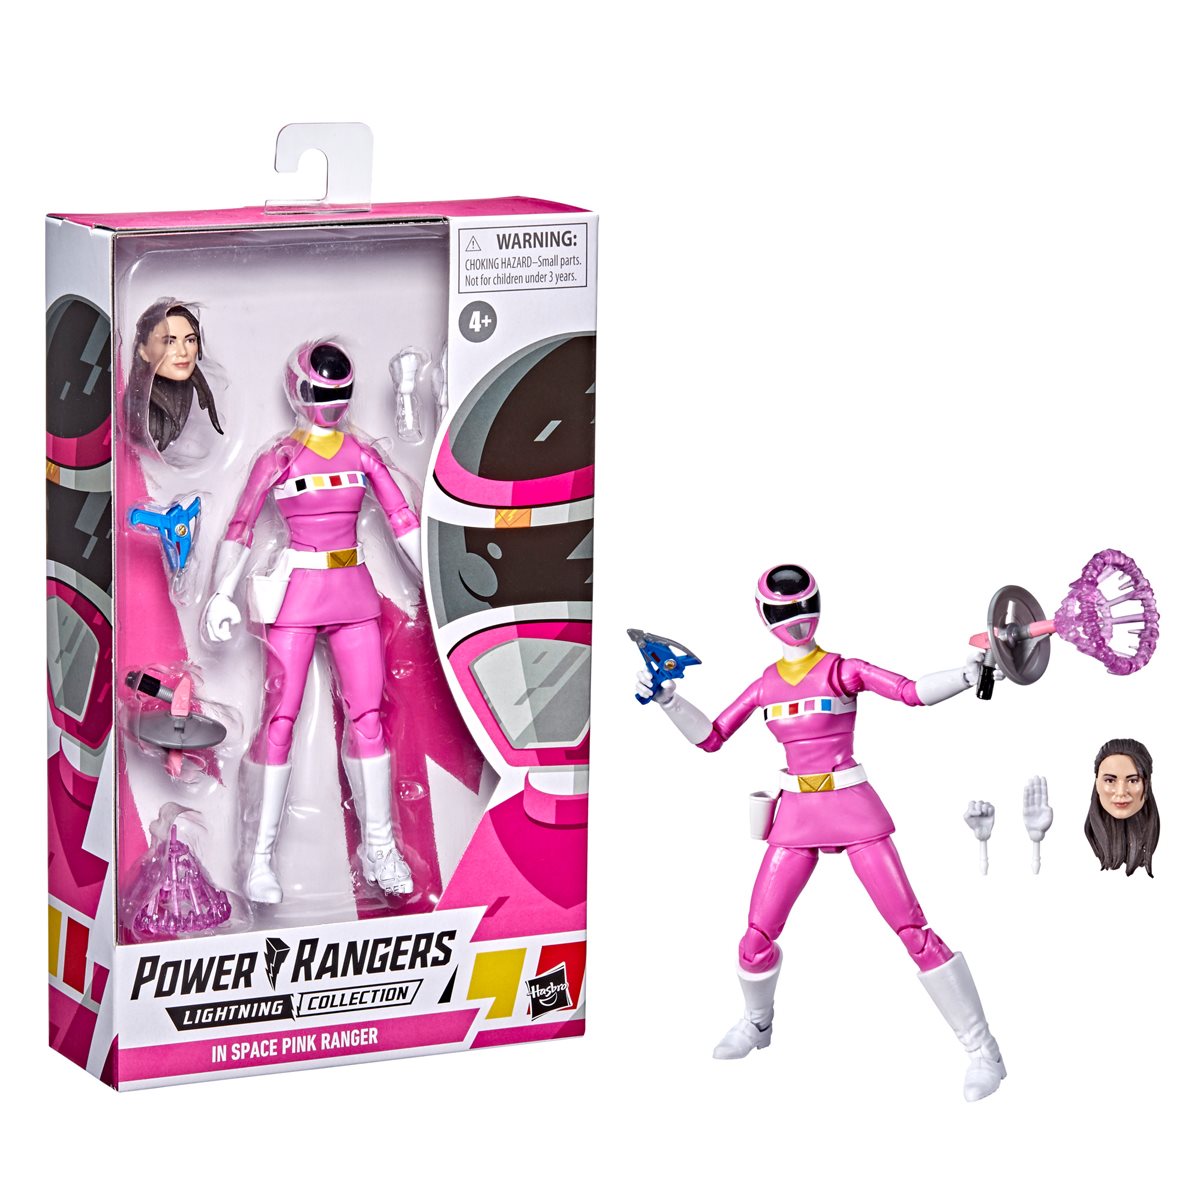 Power Rangers Lightning Collection Pink Ranger F1428  Hasbro   